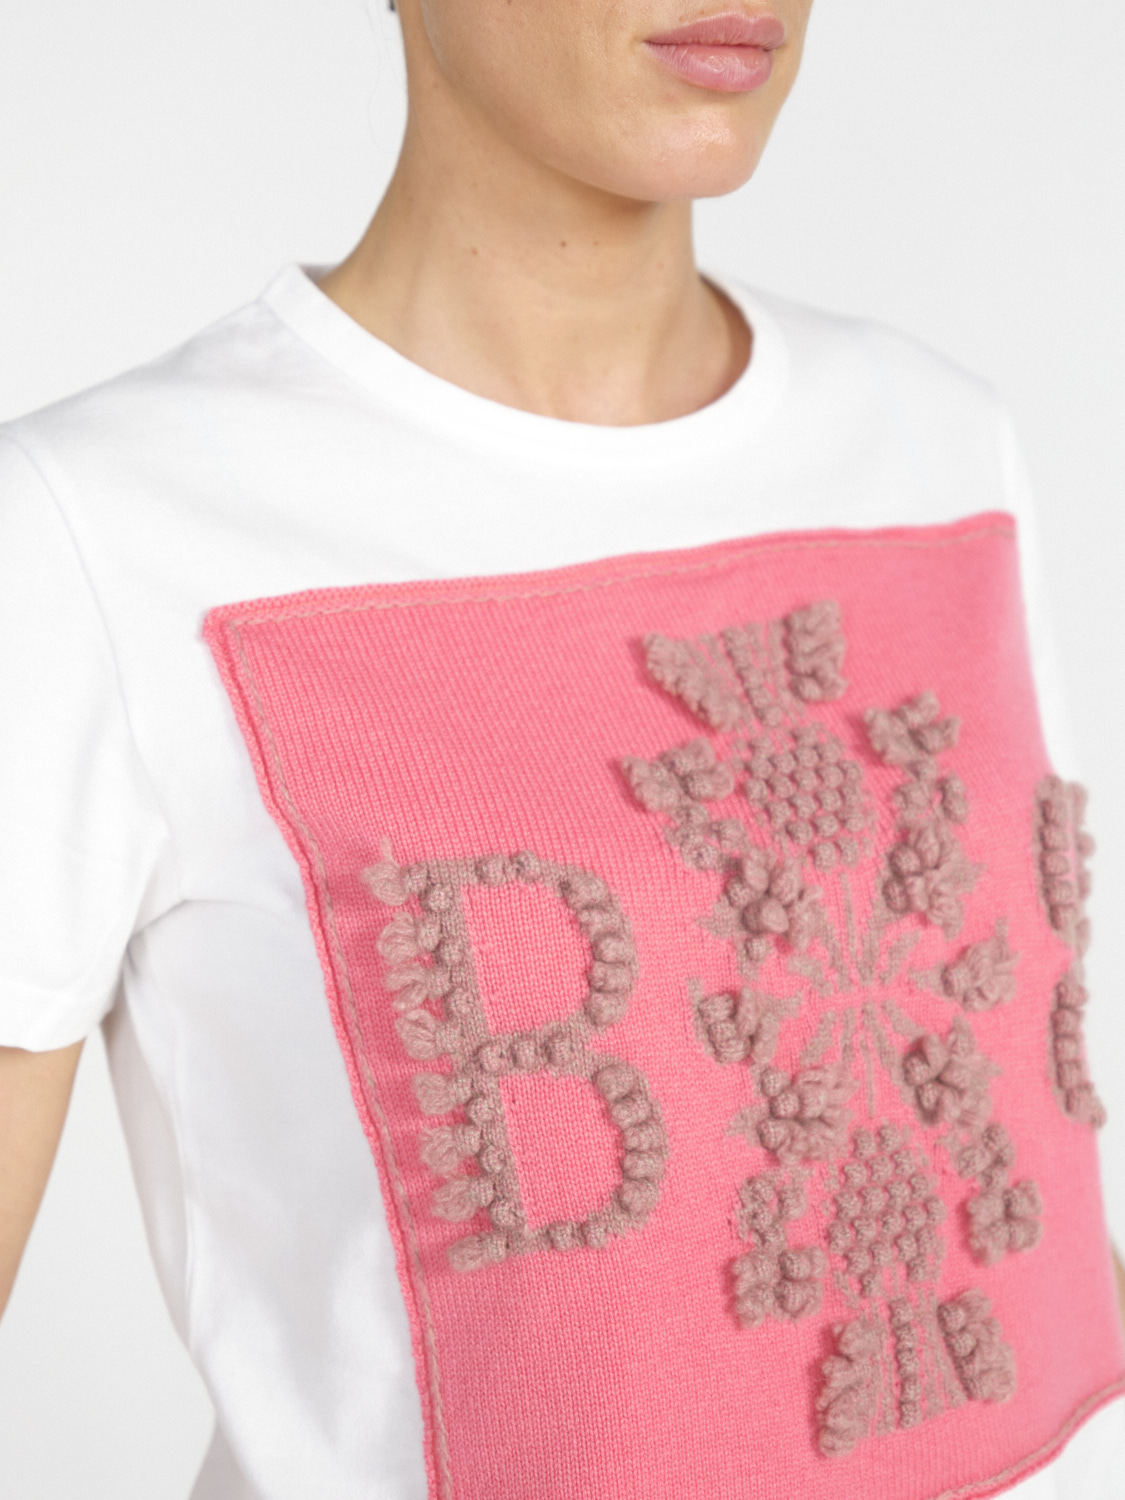 Barrie Thistle Logo Top – T-Shirt mit Kaschmir- Applikation  coral XS